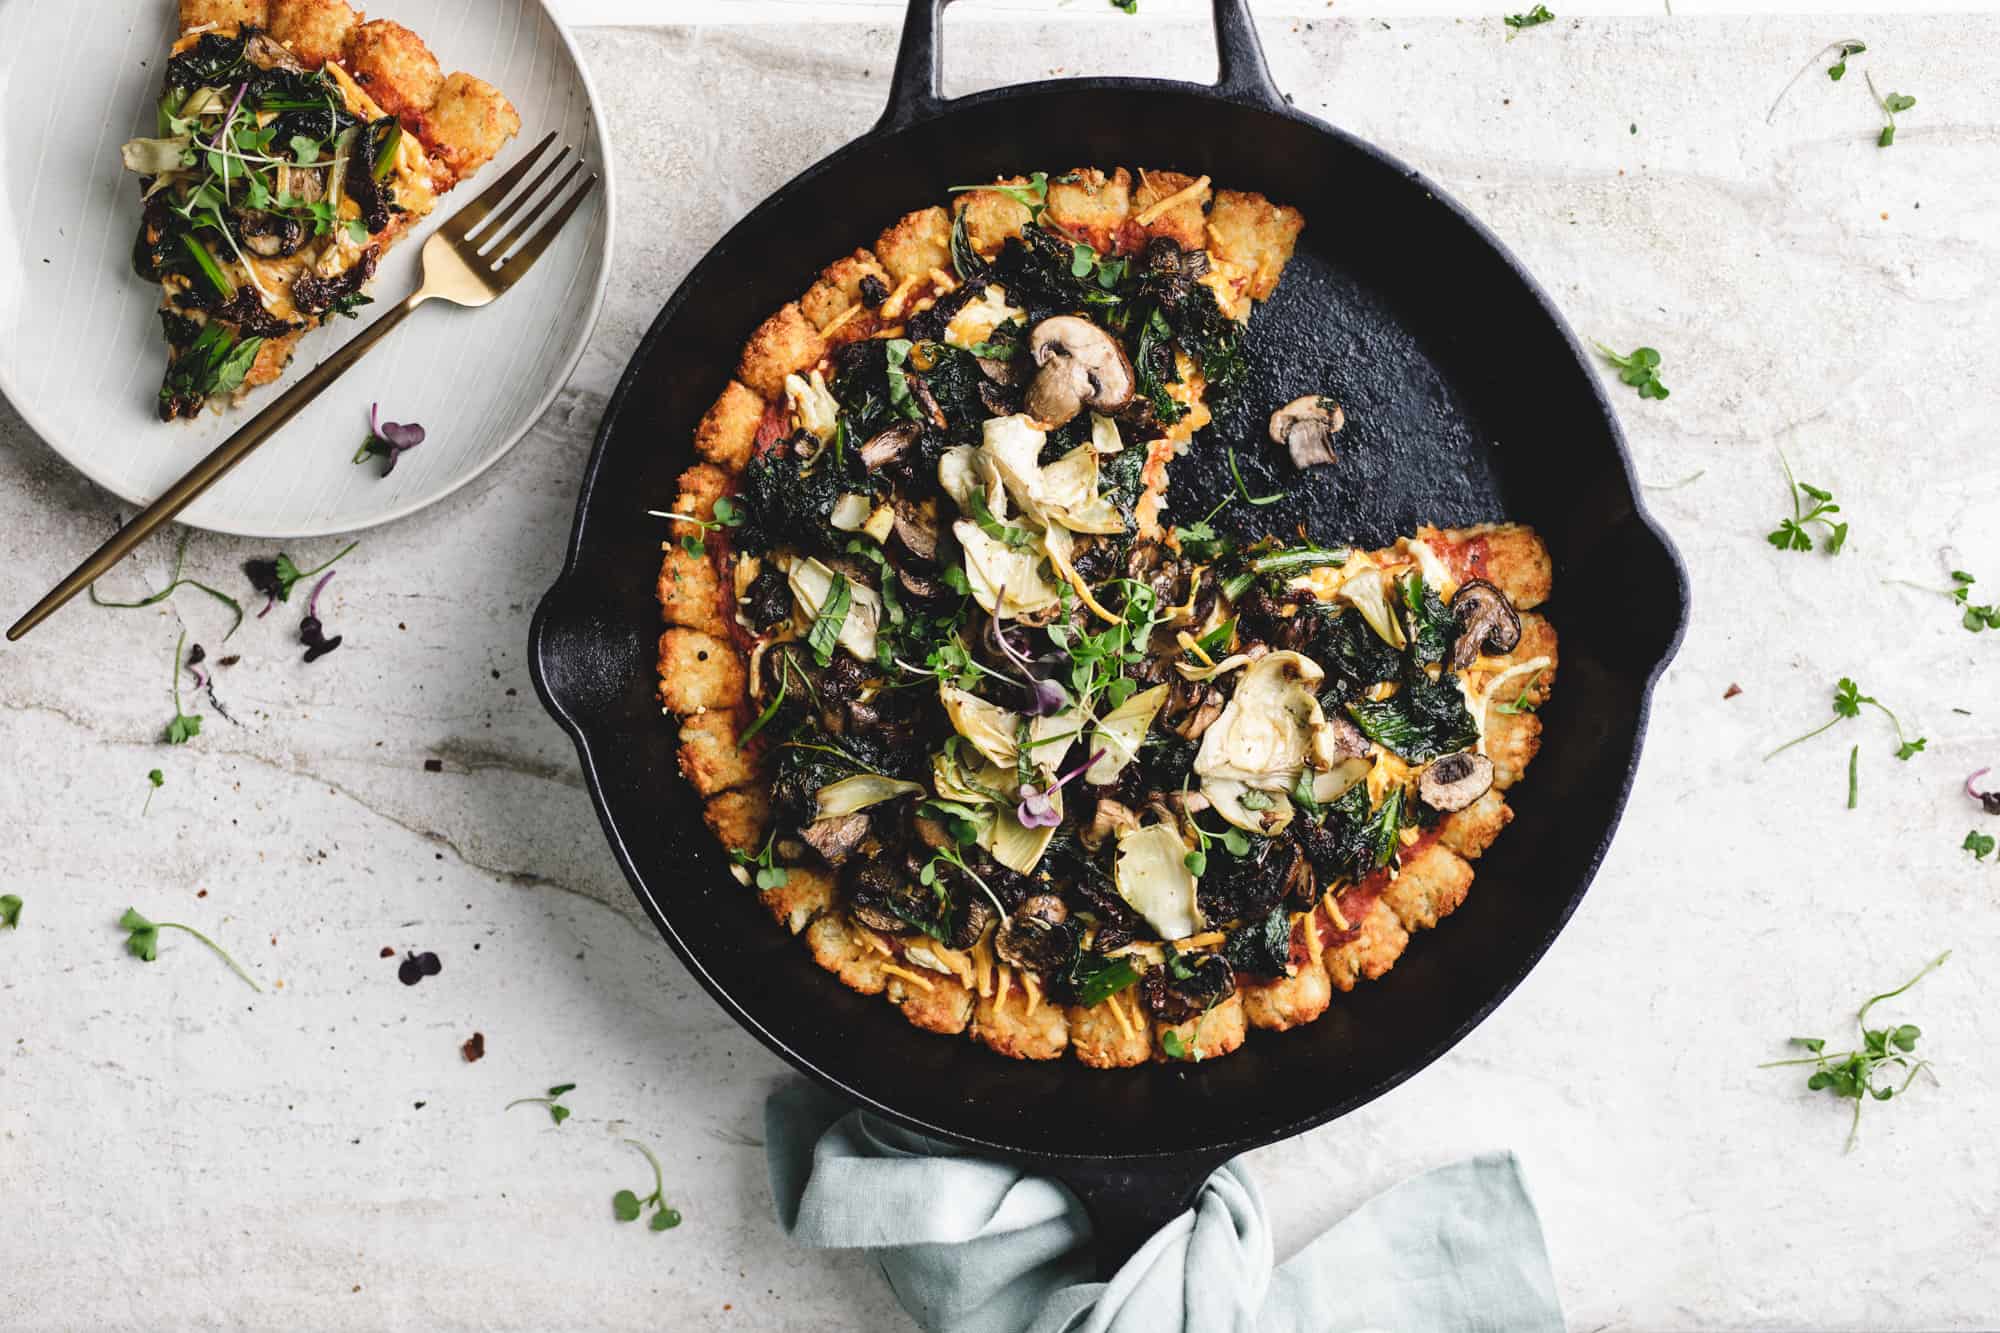 Vegan Tater Tot Pizza with Mushrooms and kale